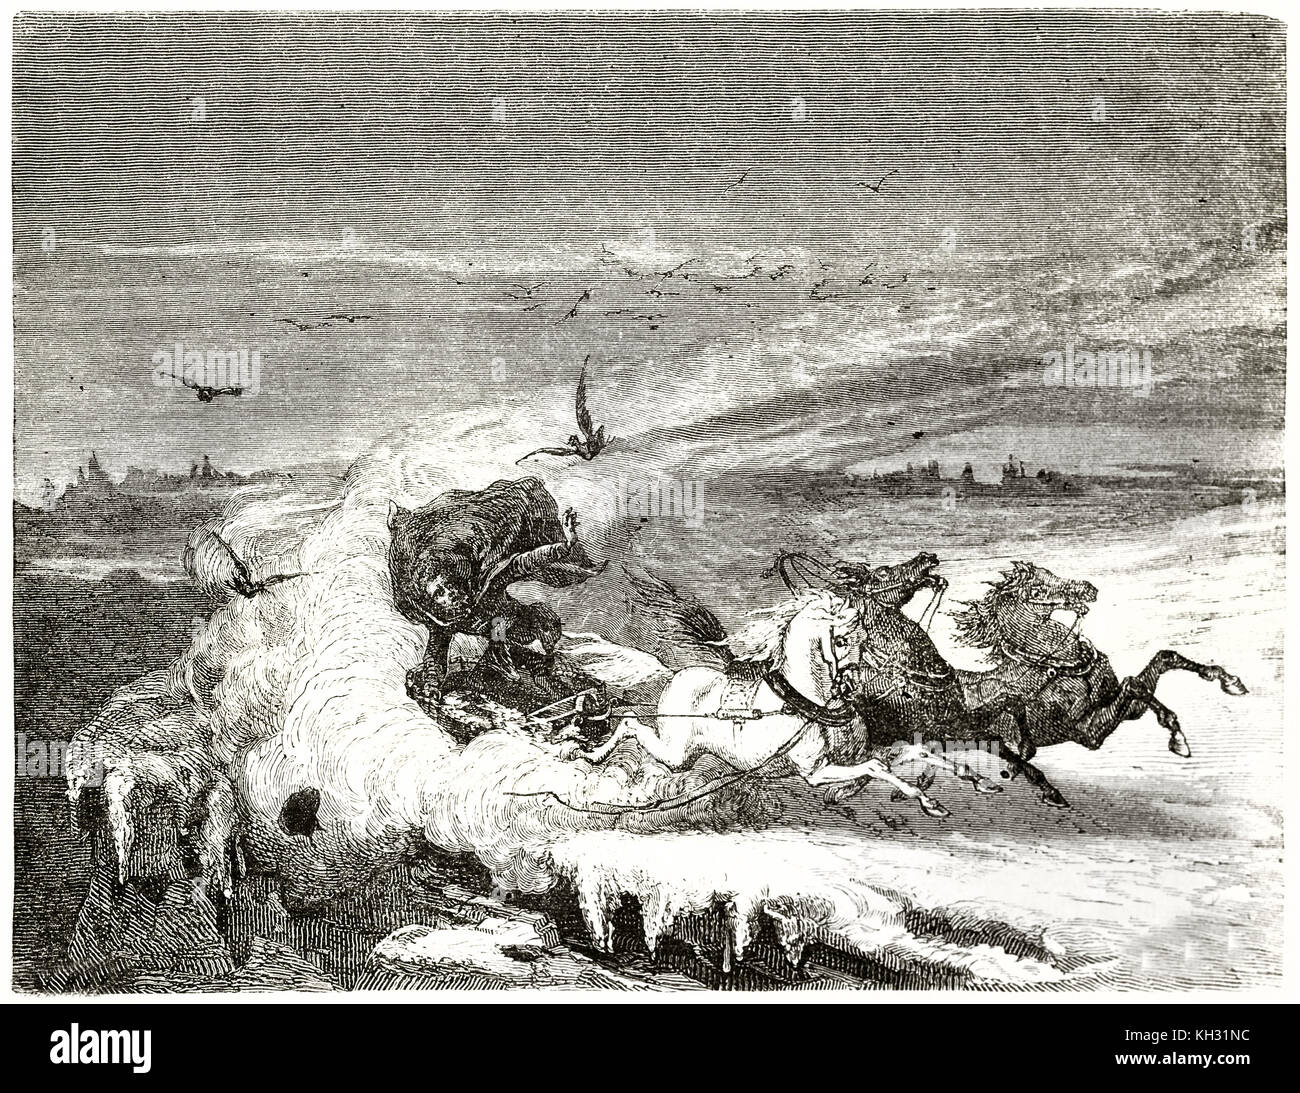 Old illustration of a running sleigh. By D'Argent after Atkinson, publ. on le Tour du Monde, Paris, 1863 Stock Photo